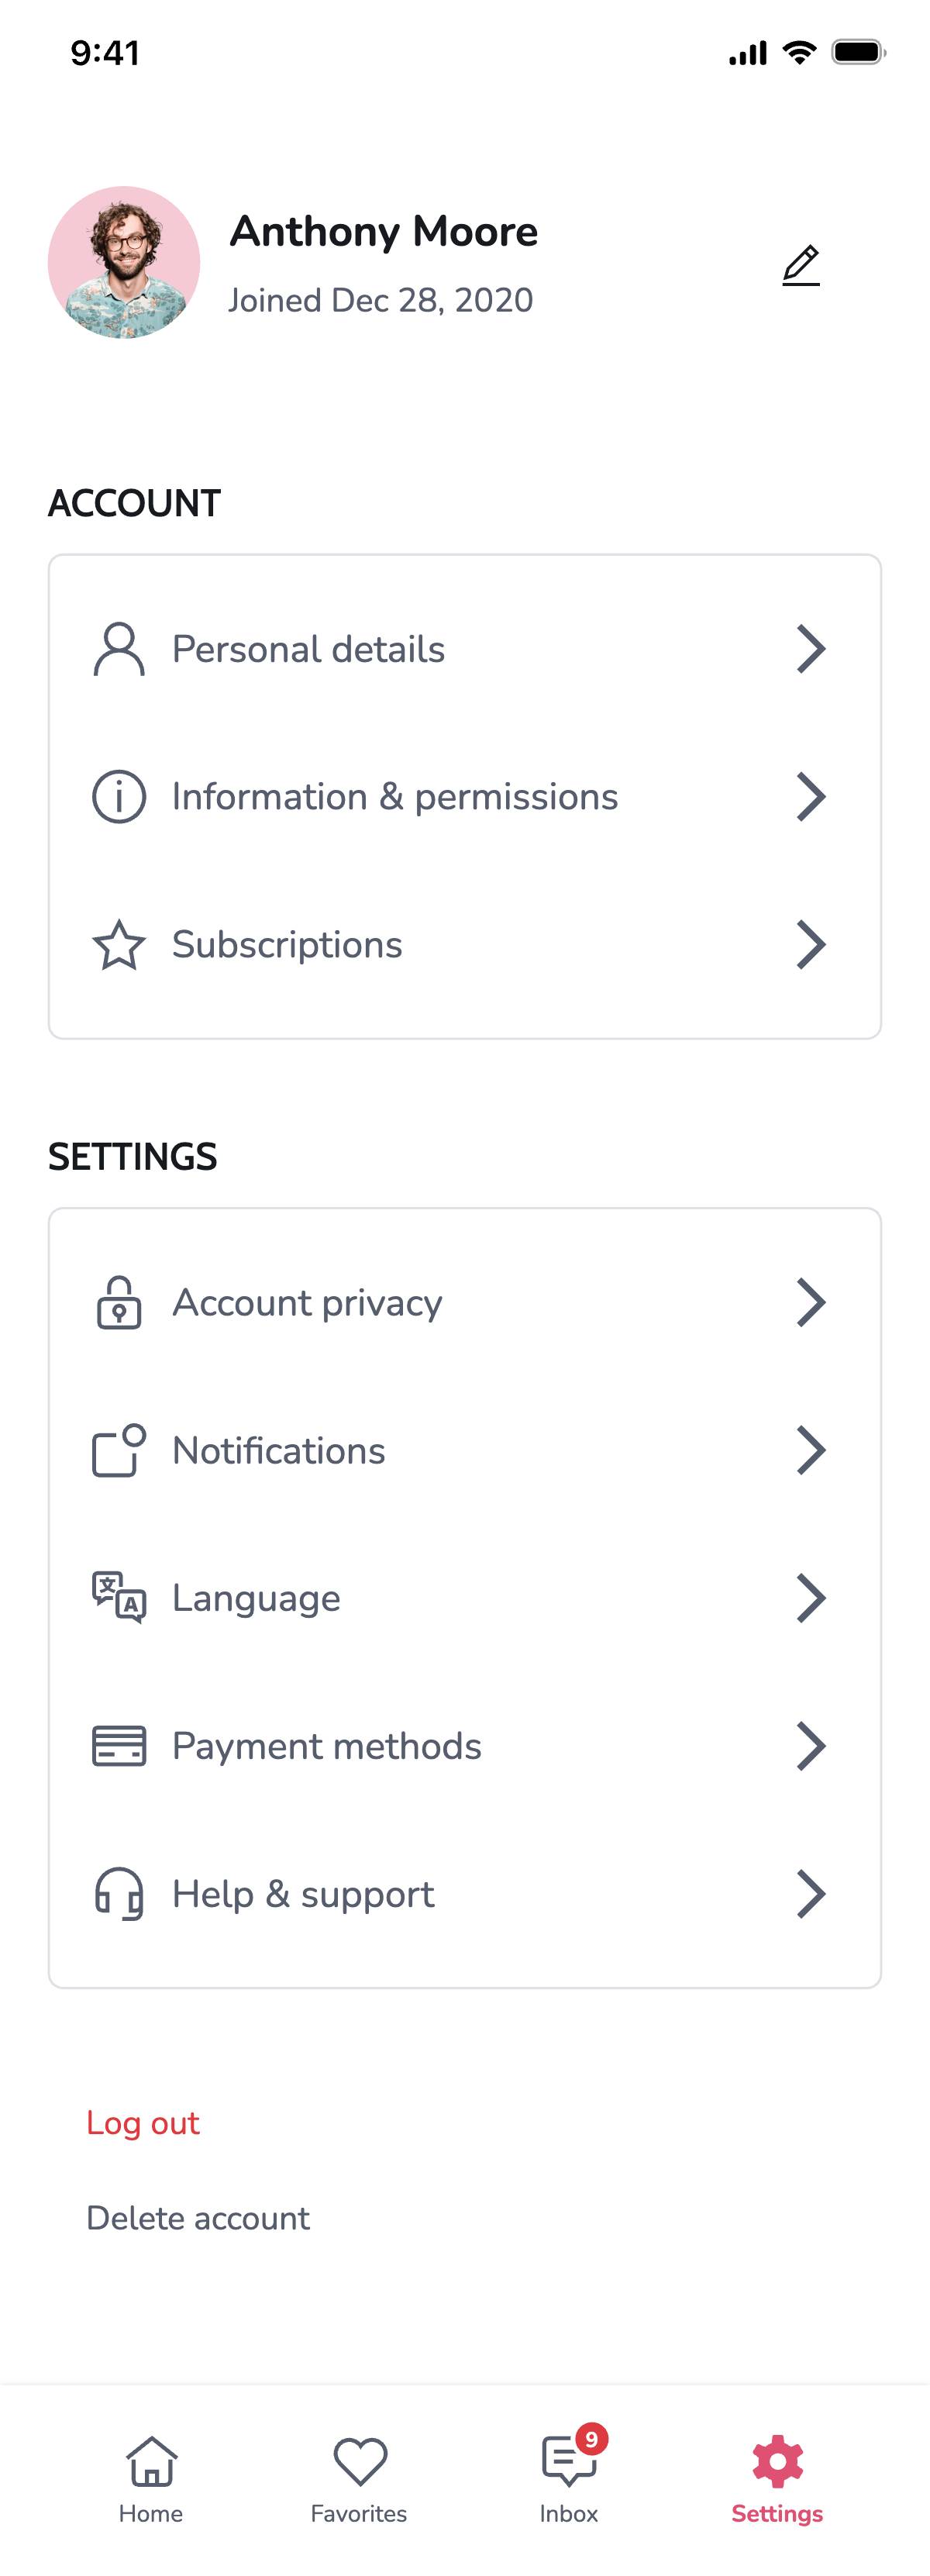 Account settings